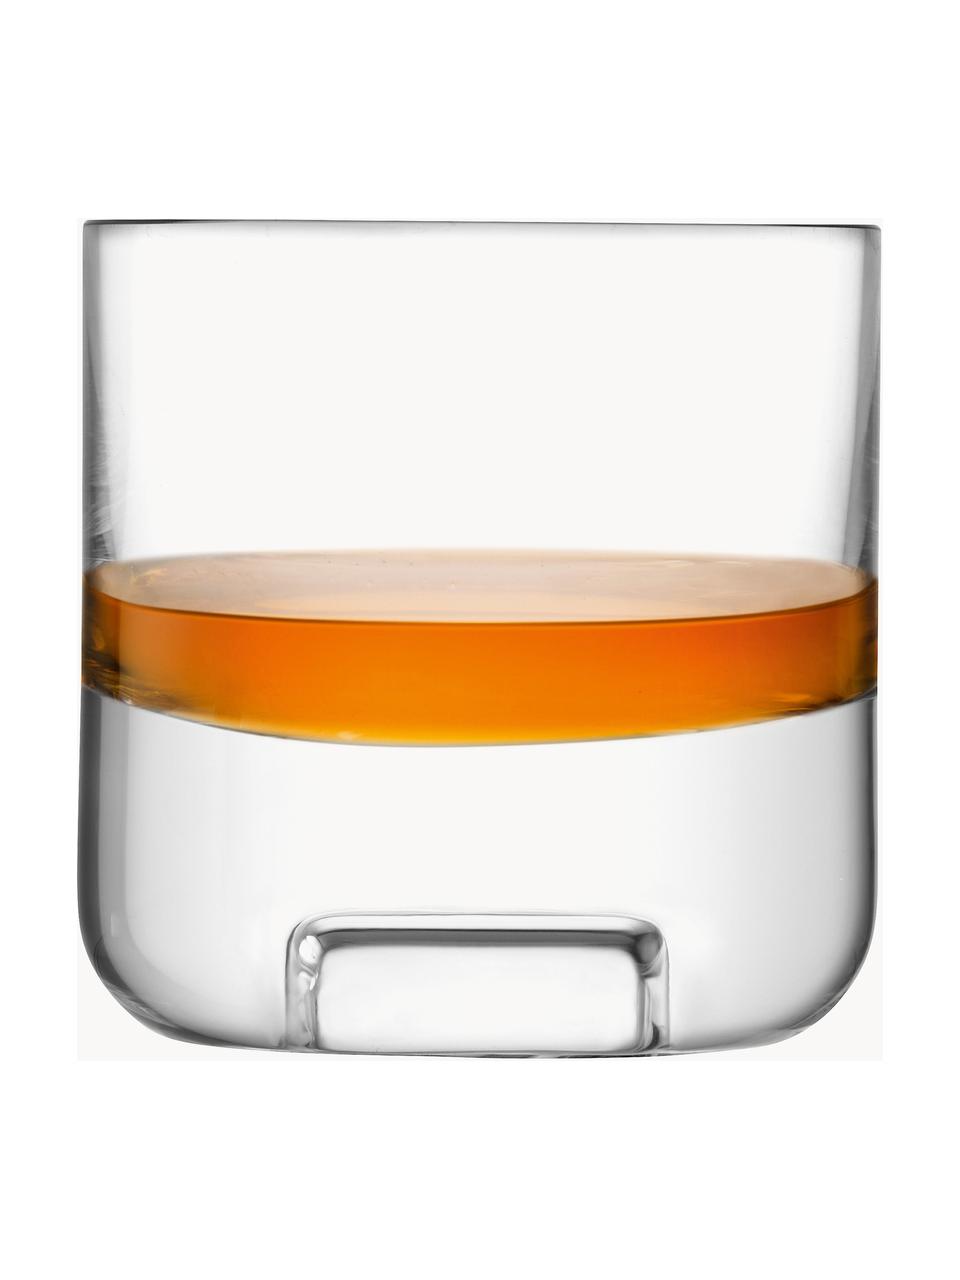 Komplet do whisky Cask, 3 elem., Szkło, Transparentny, Komplet z różnymi rozmiarami